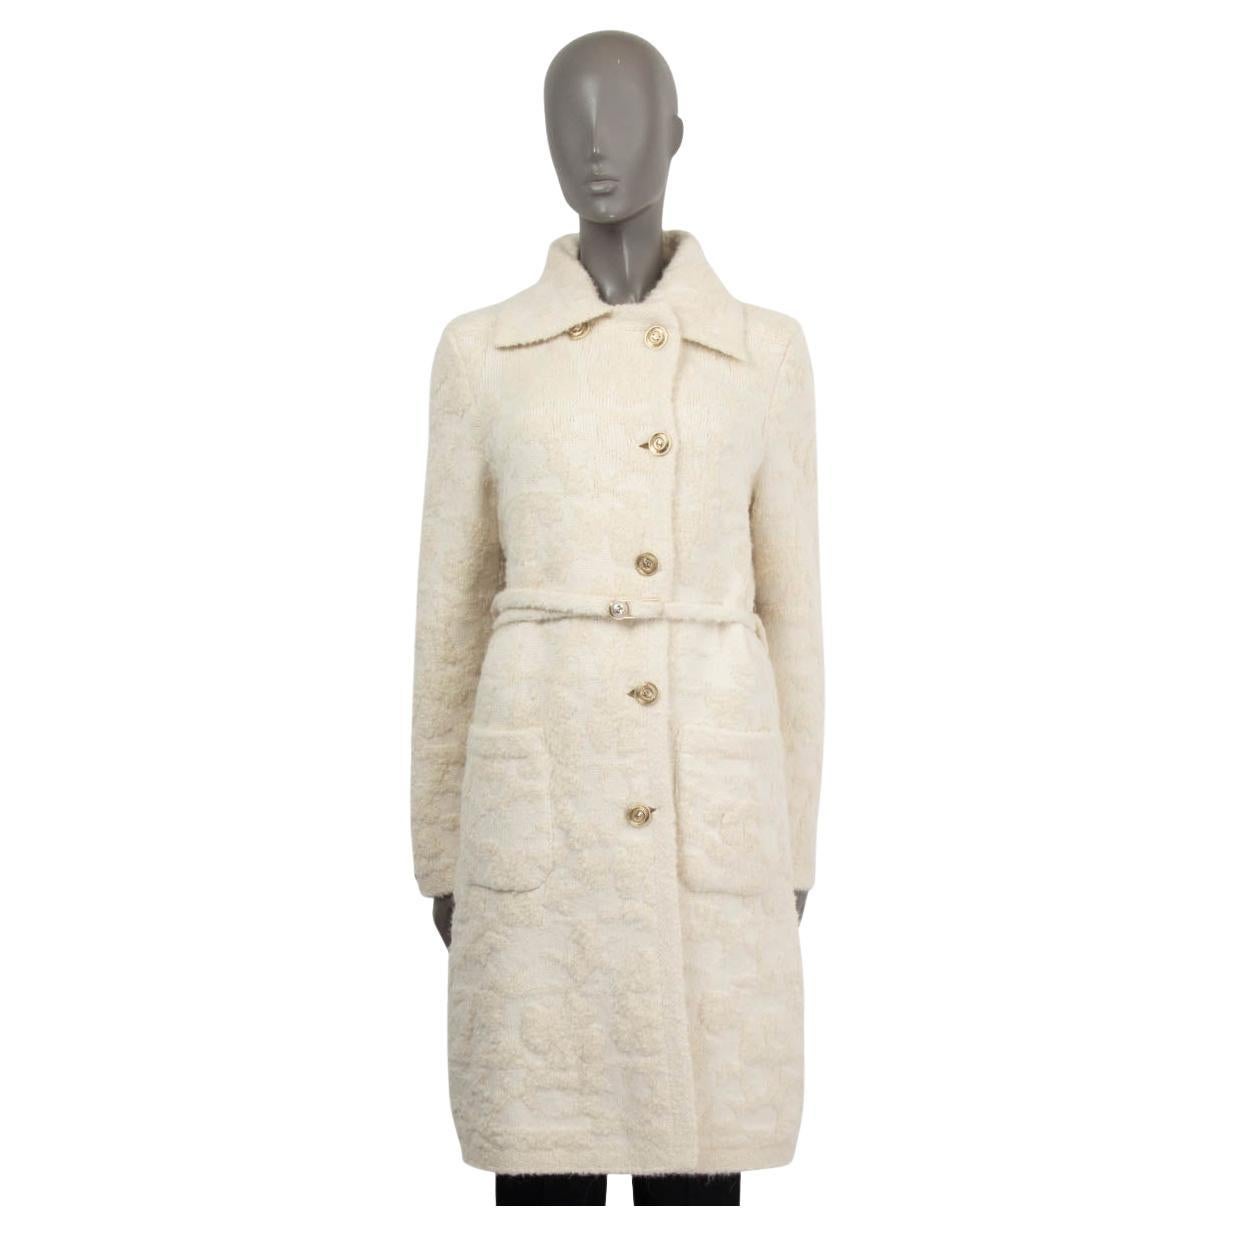 CHANEL ivory cashmere & alpaca 2020 20K Belted Knit Coat Jacket 36 XS